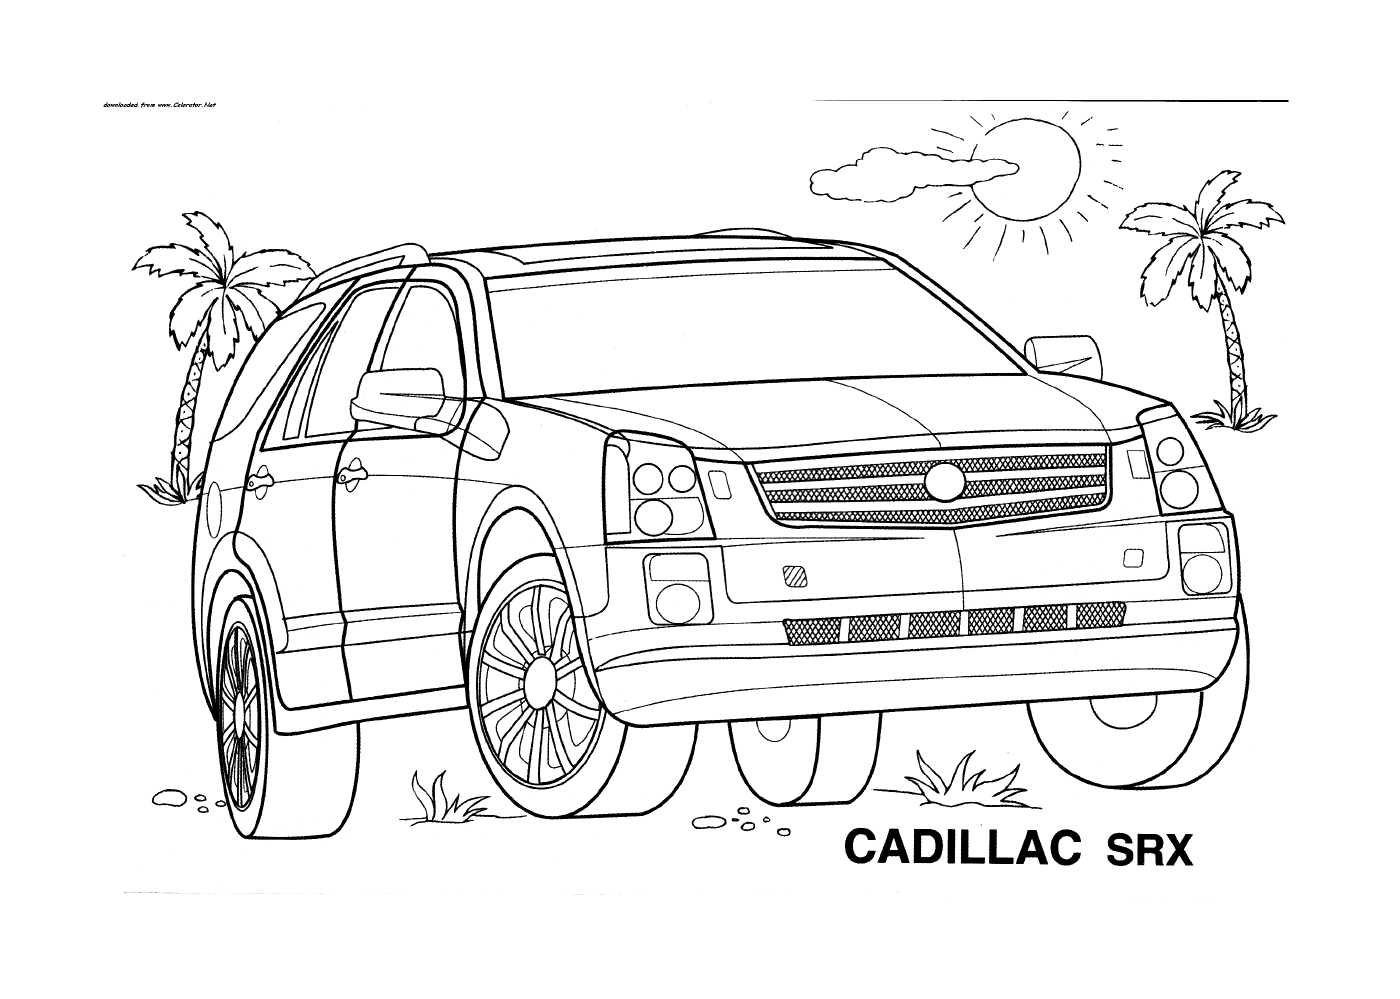   Cadillac SRX luxueuse 